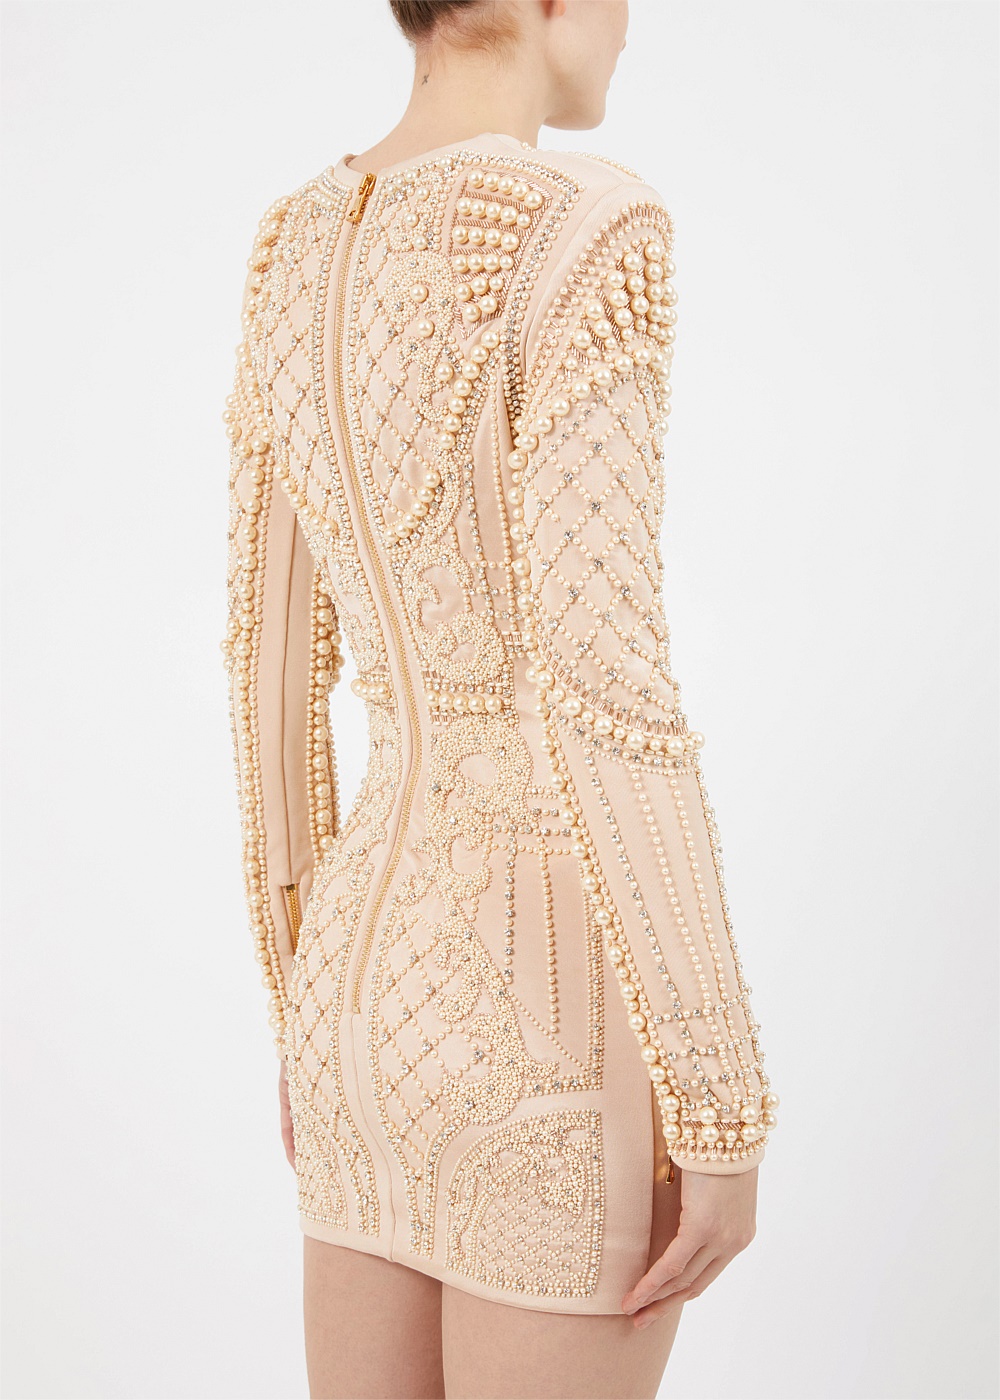 Balmain Bead-Embellished Body-Con Mini Dress Bergdorf, 50% OFF